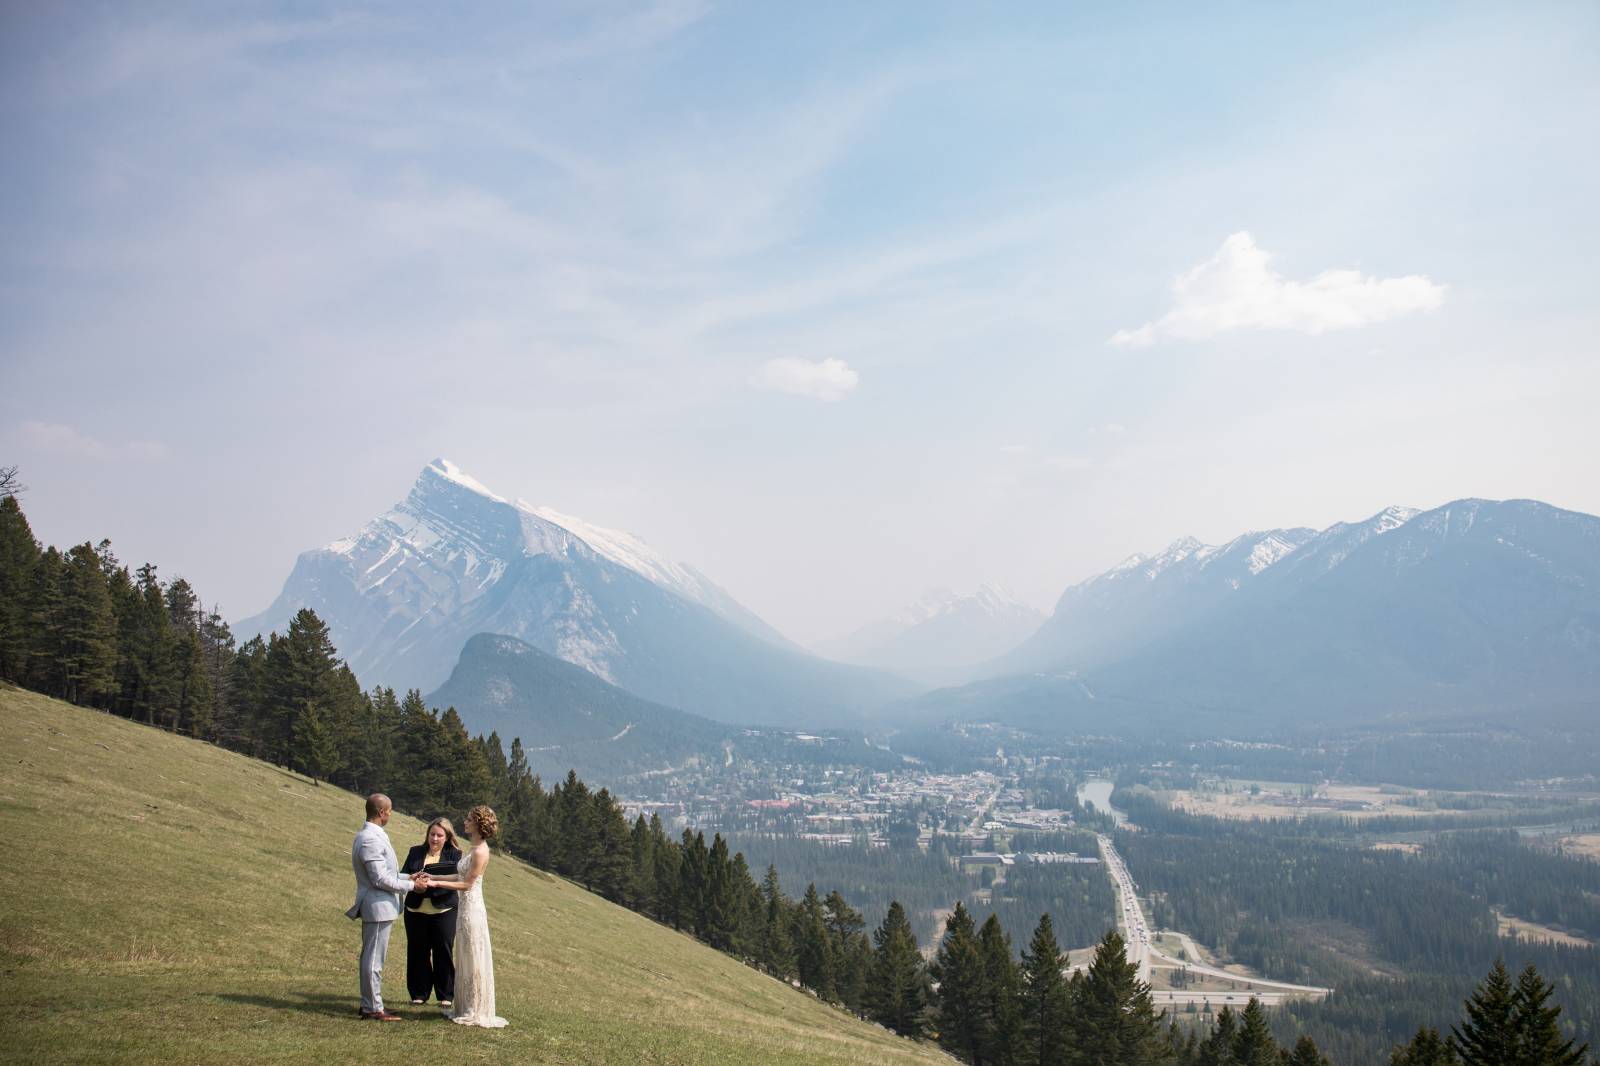 Banff Norquay Lookout, Banff Norquay Wedding Ceremony, Outdoor elopement location, Banff Norquay elo